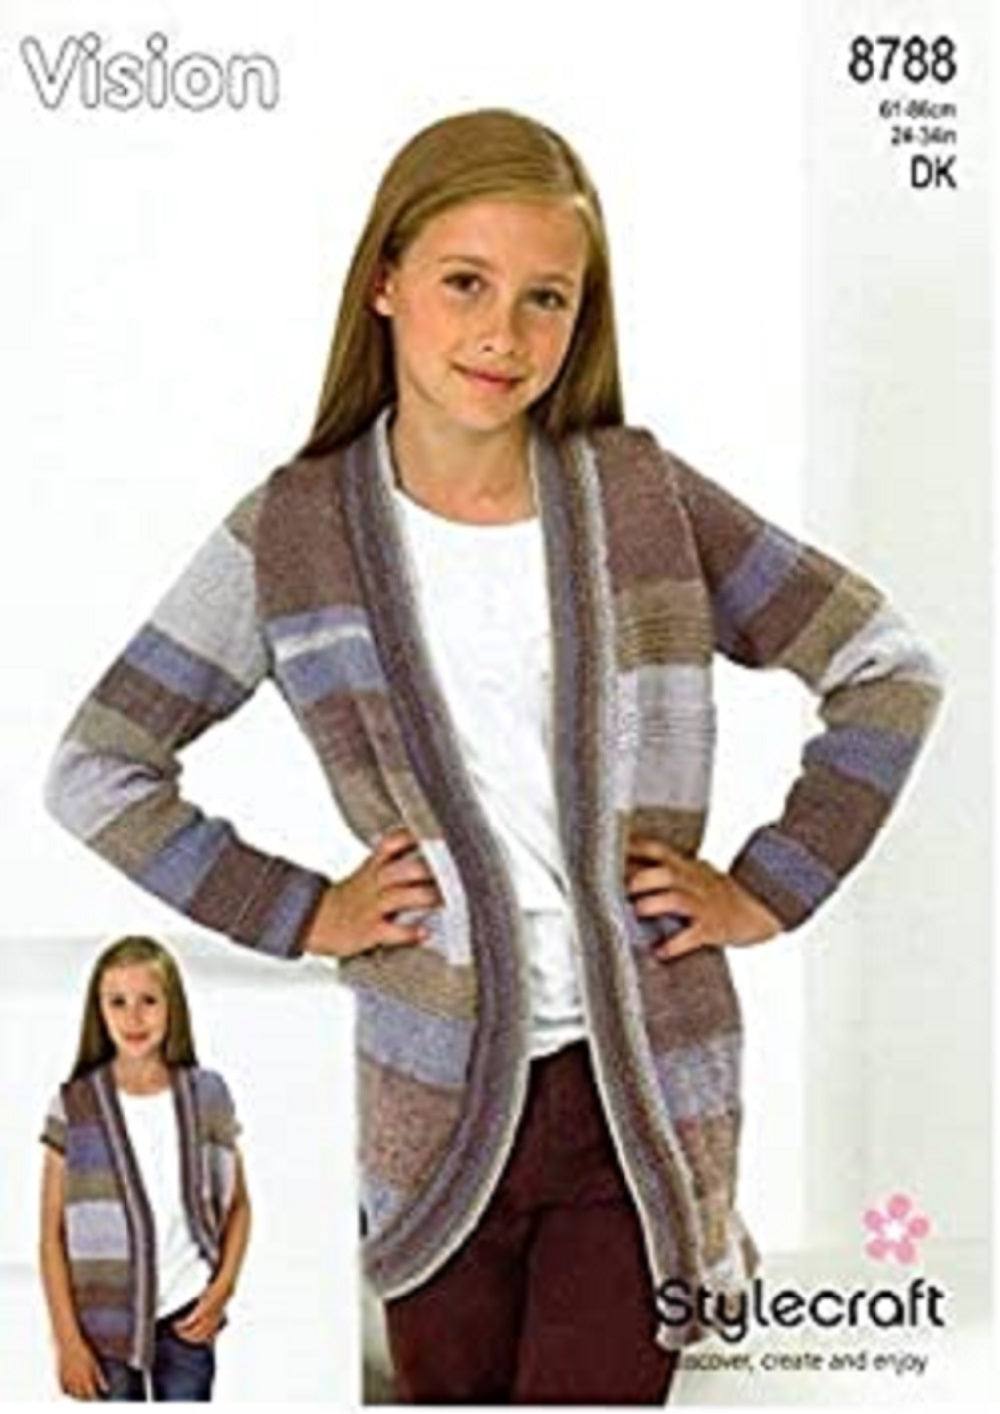 Stylecraft 8788 Childs DK Jackets Knitting Pattern